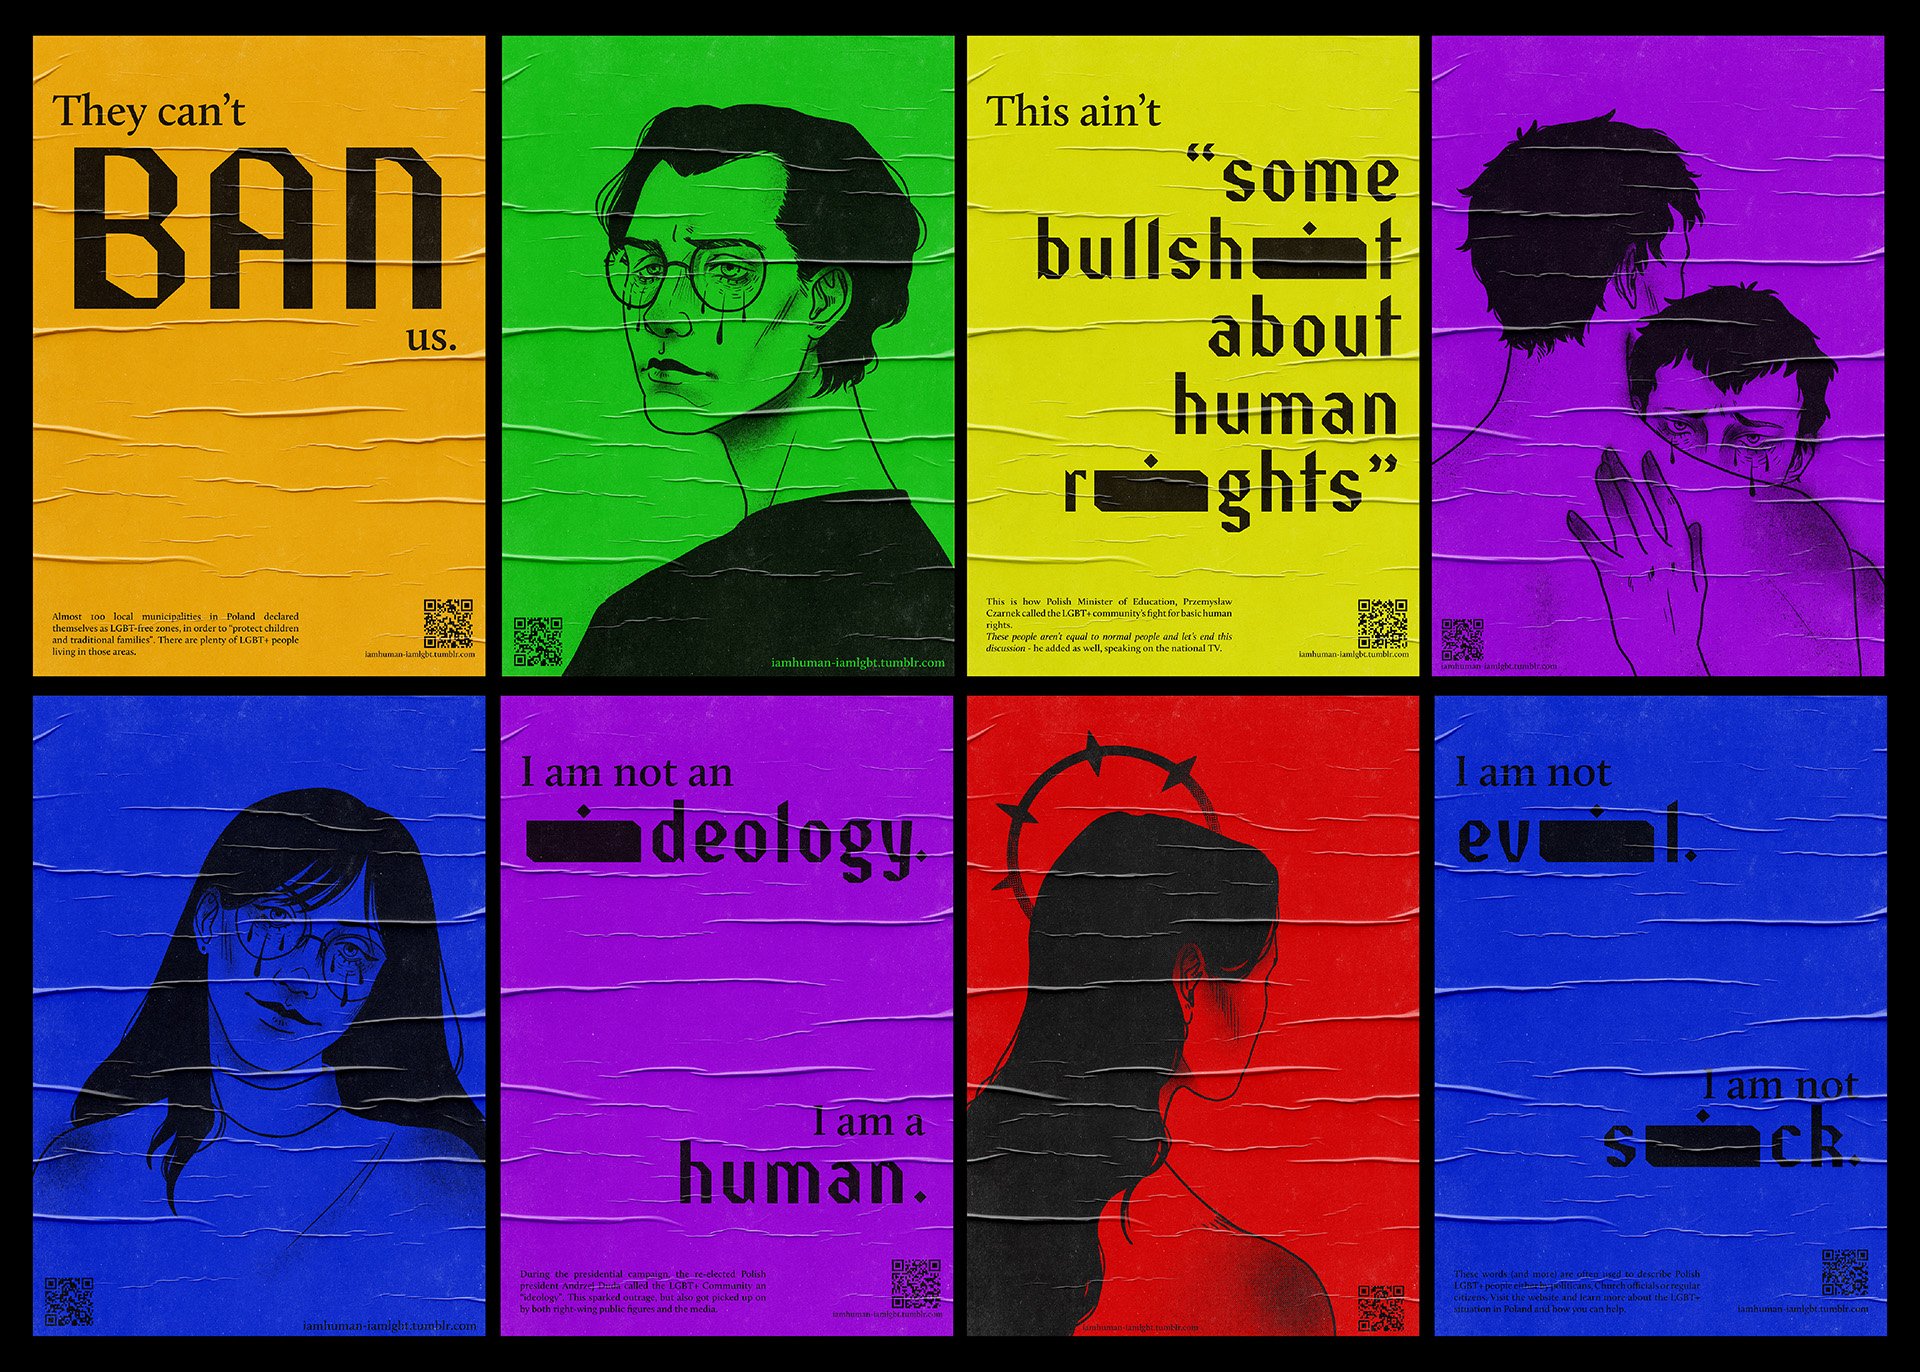 I am human. I am LGBT+.